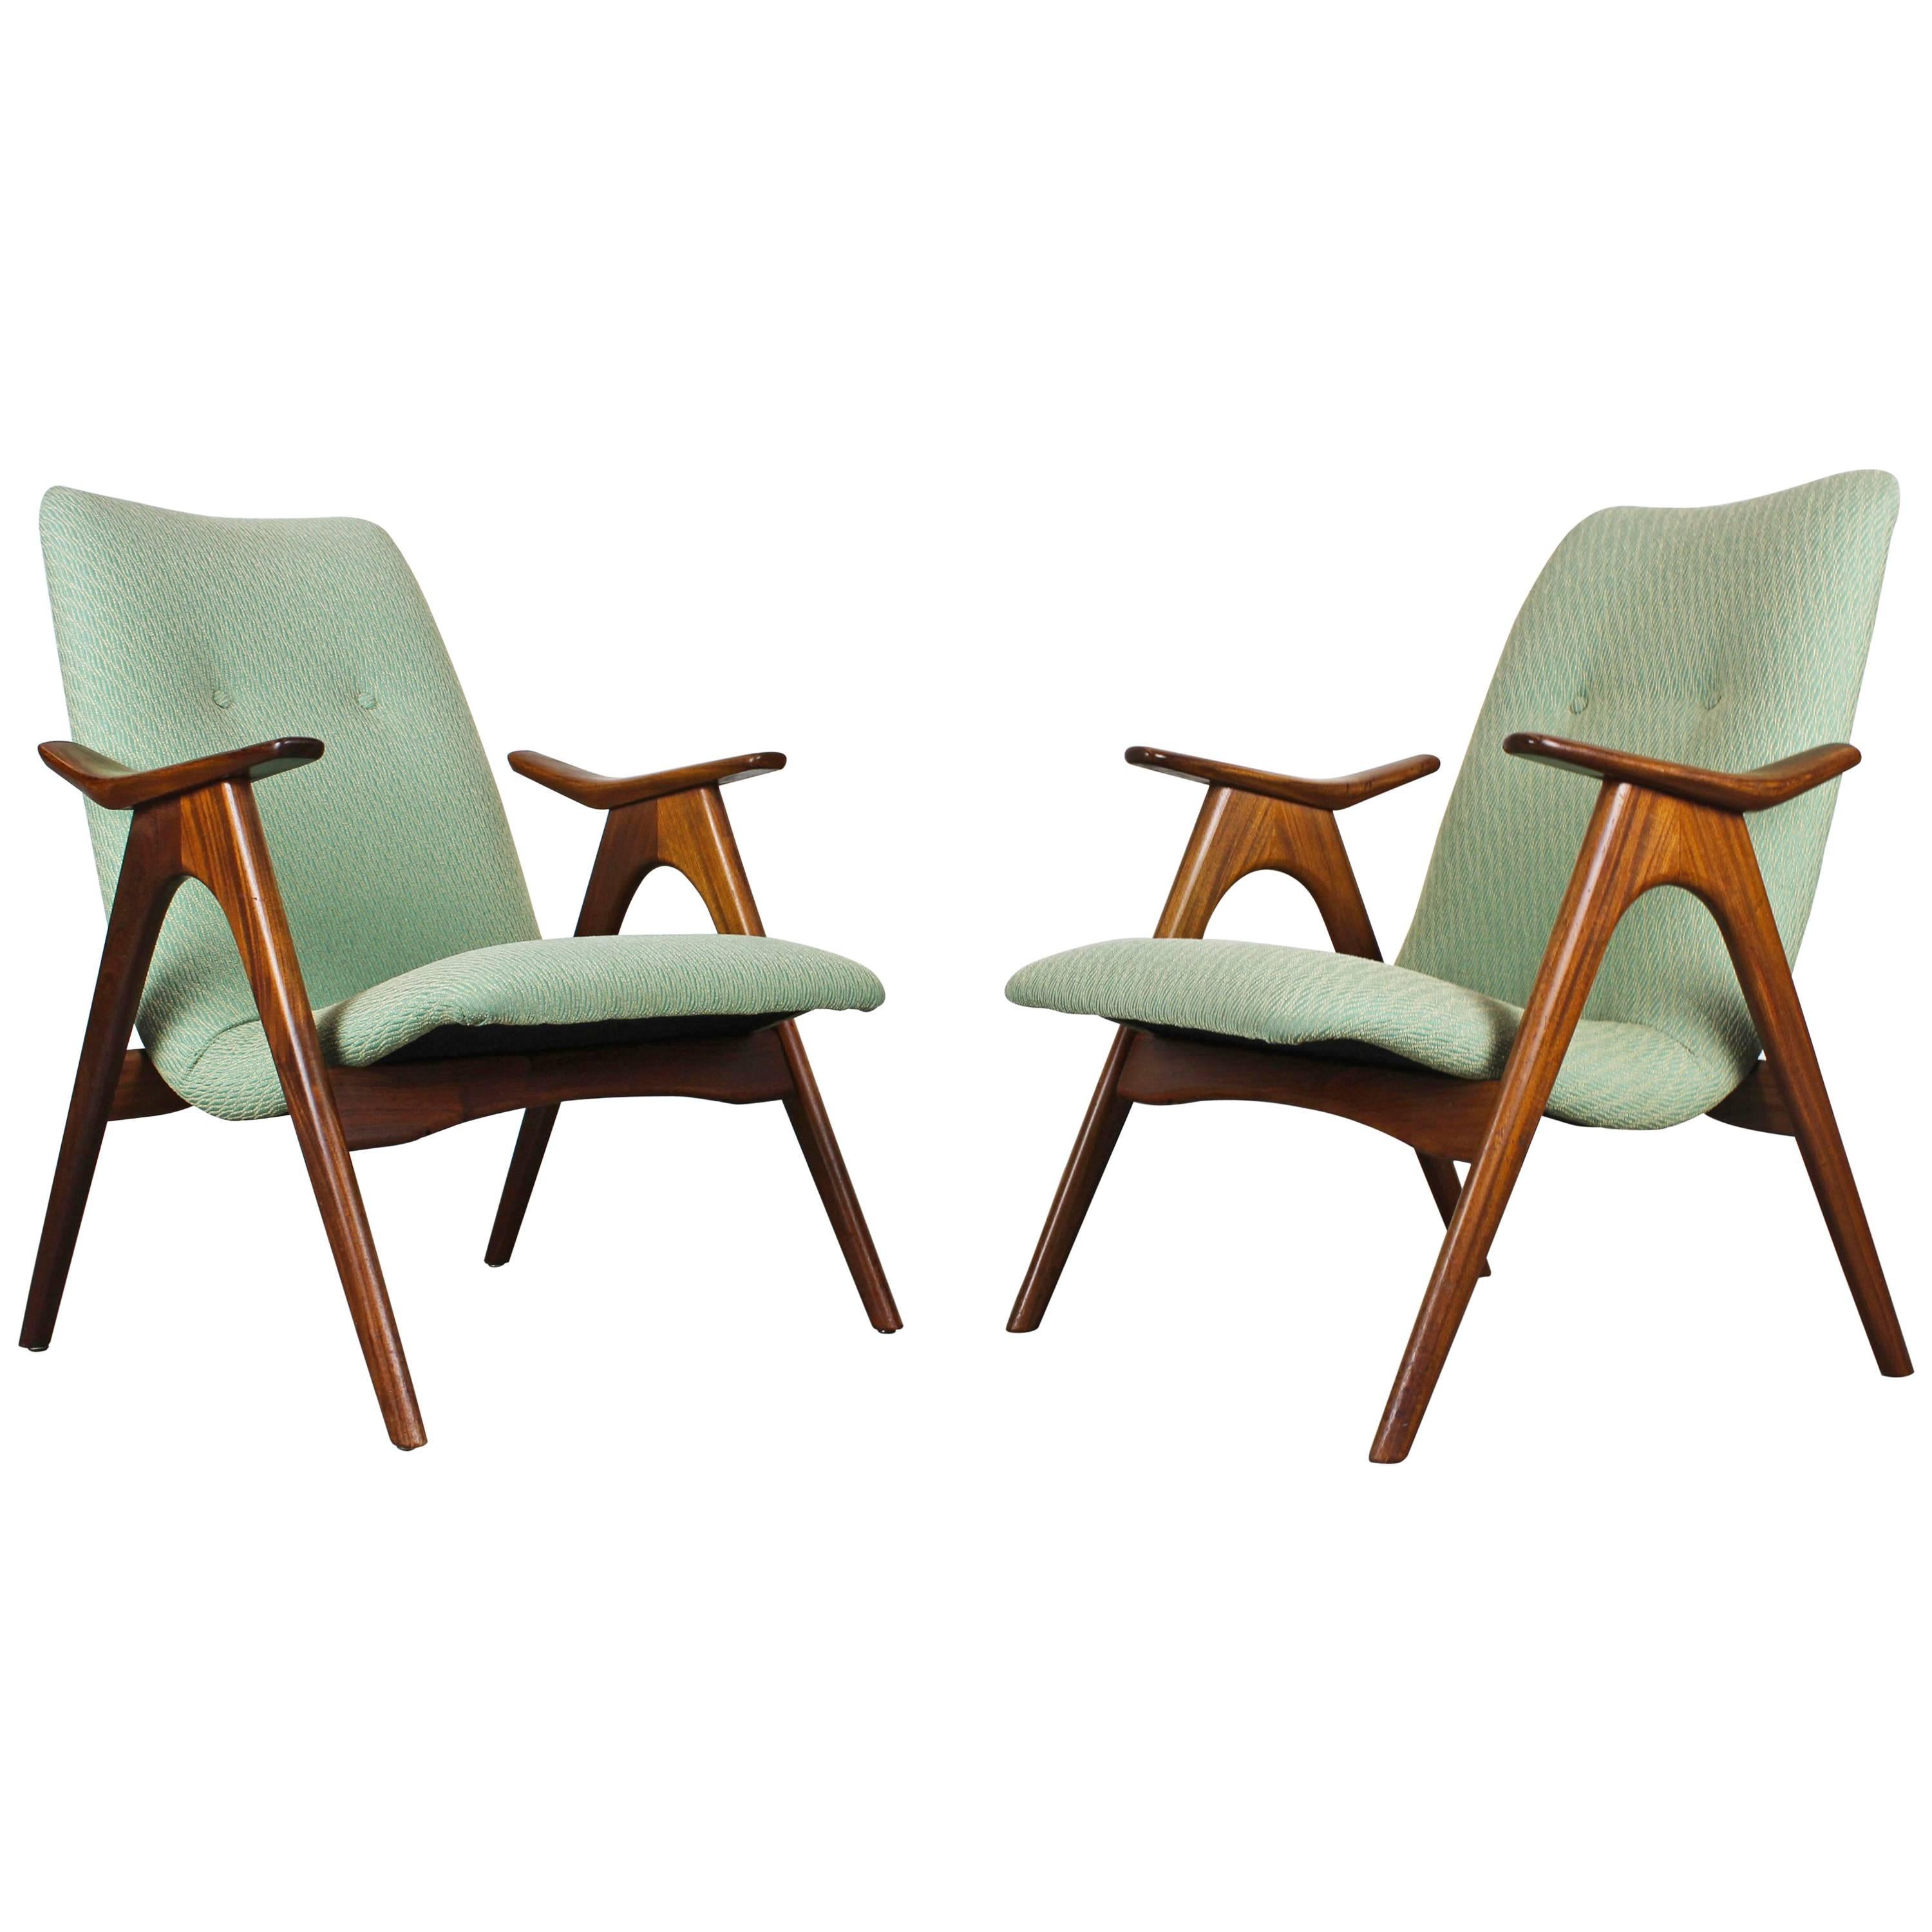 Pair of Louis Van Teeffelen Lounge Chairs for Webe, 1960 Solid Teak Green White